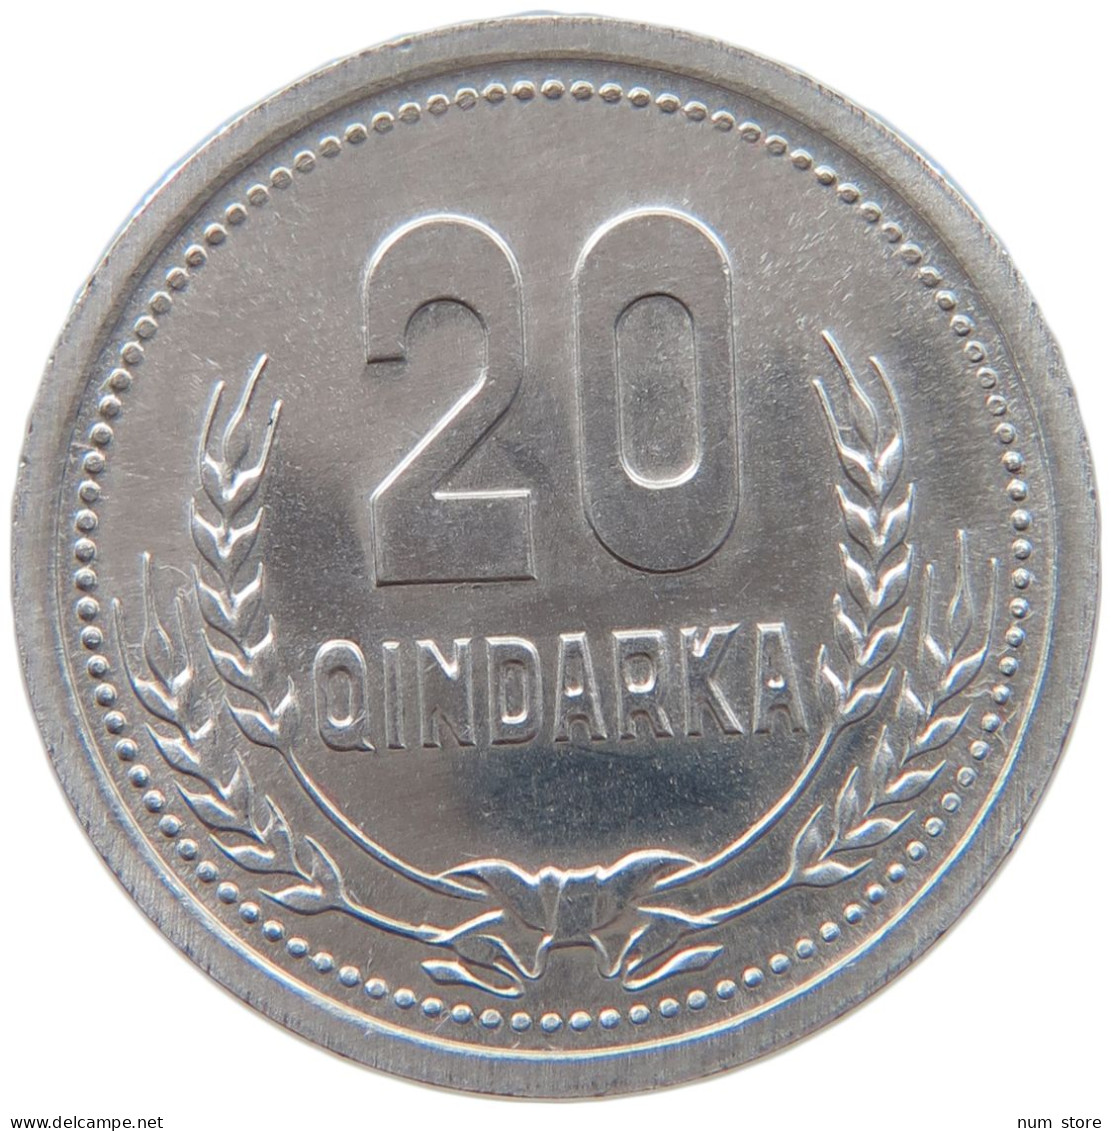 ALBANIA 20 QINDARKA 1988  #MA 066605 - Orientalische Münzen